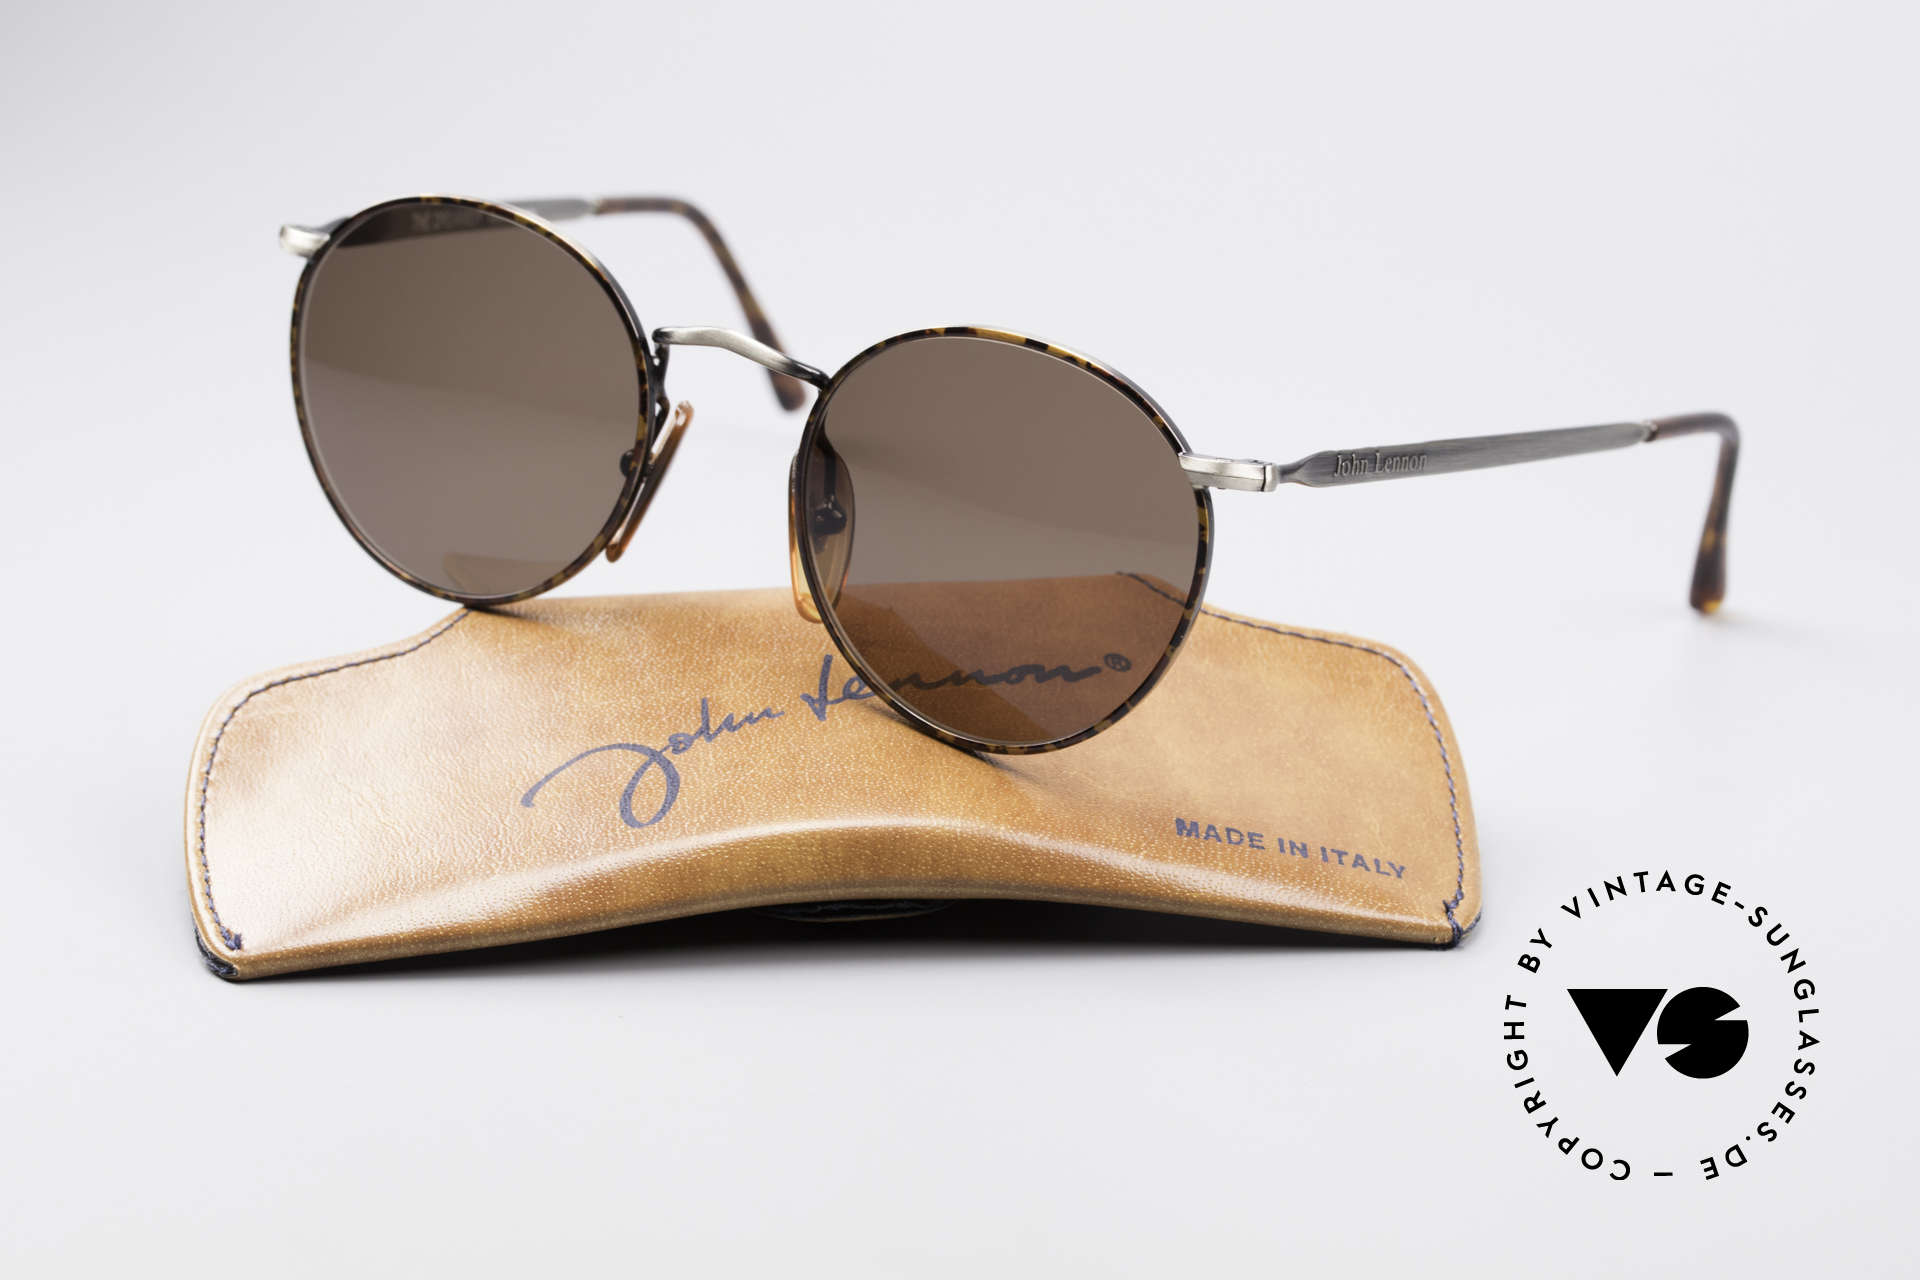 Sunglasses John Lennon - The Dreamer Small Round Vintage Shades ...